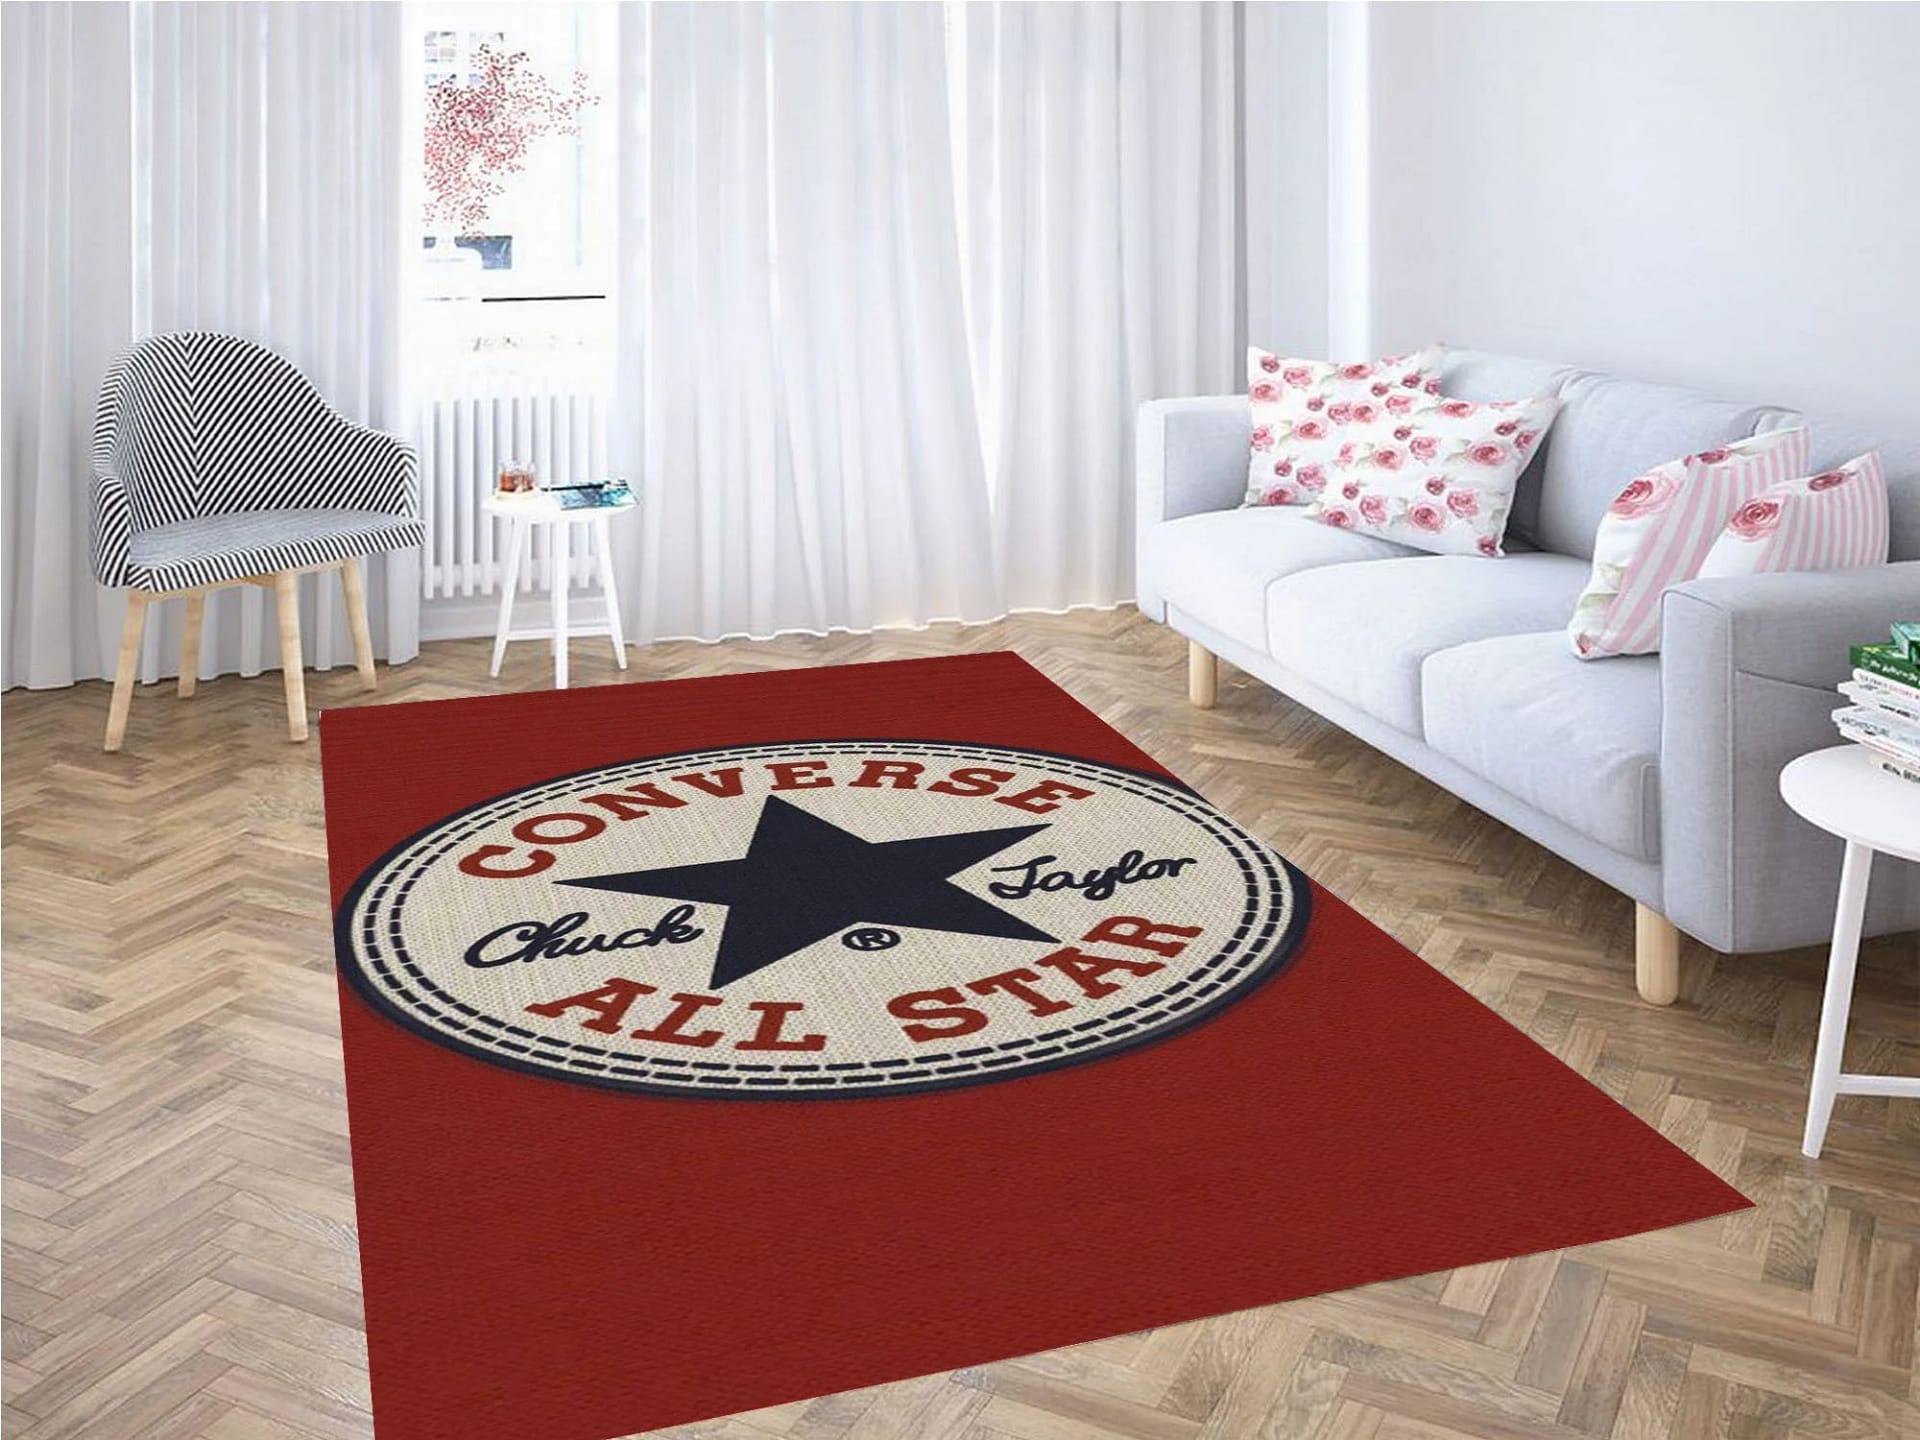 Converse All Star Logo Carpet Rug